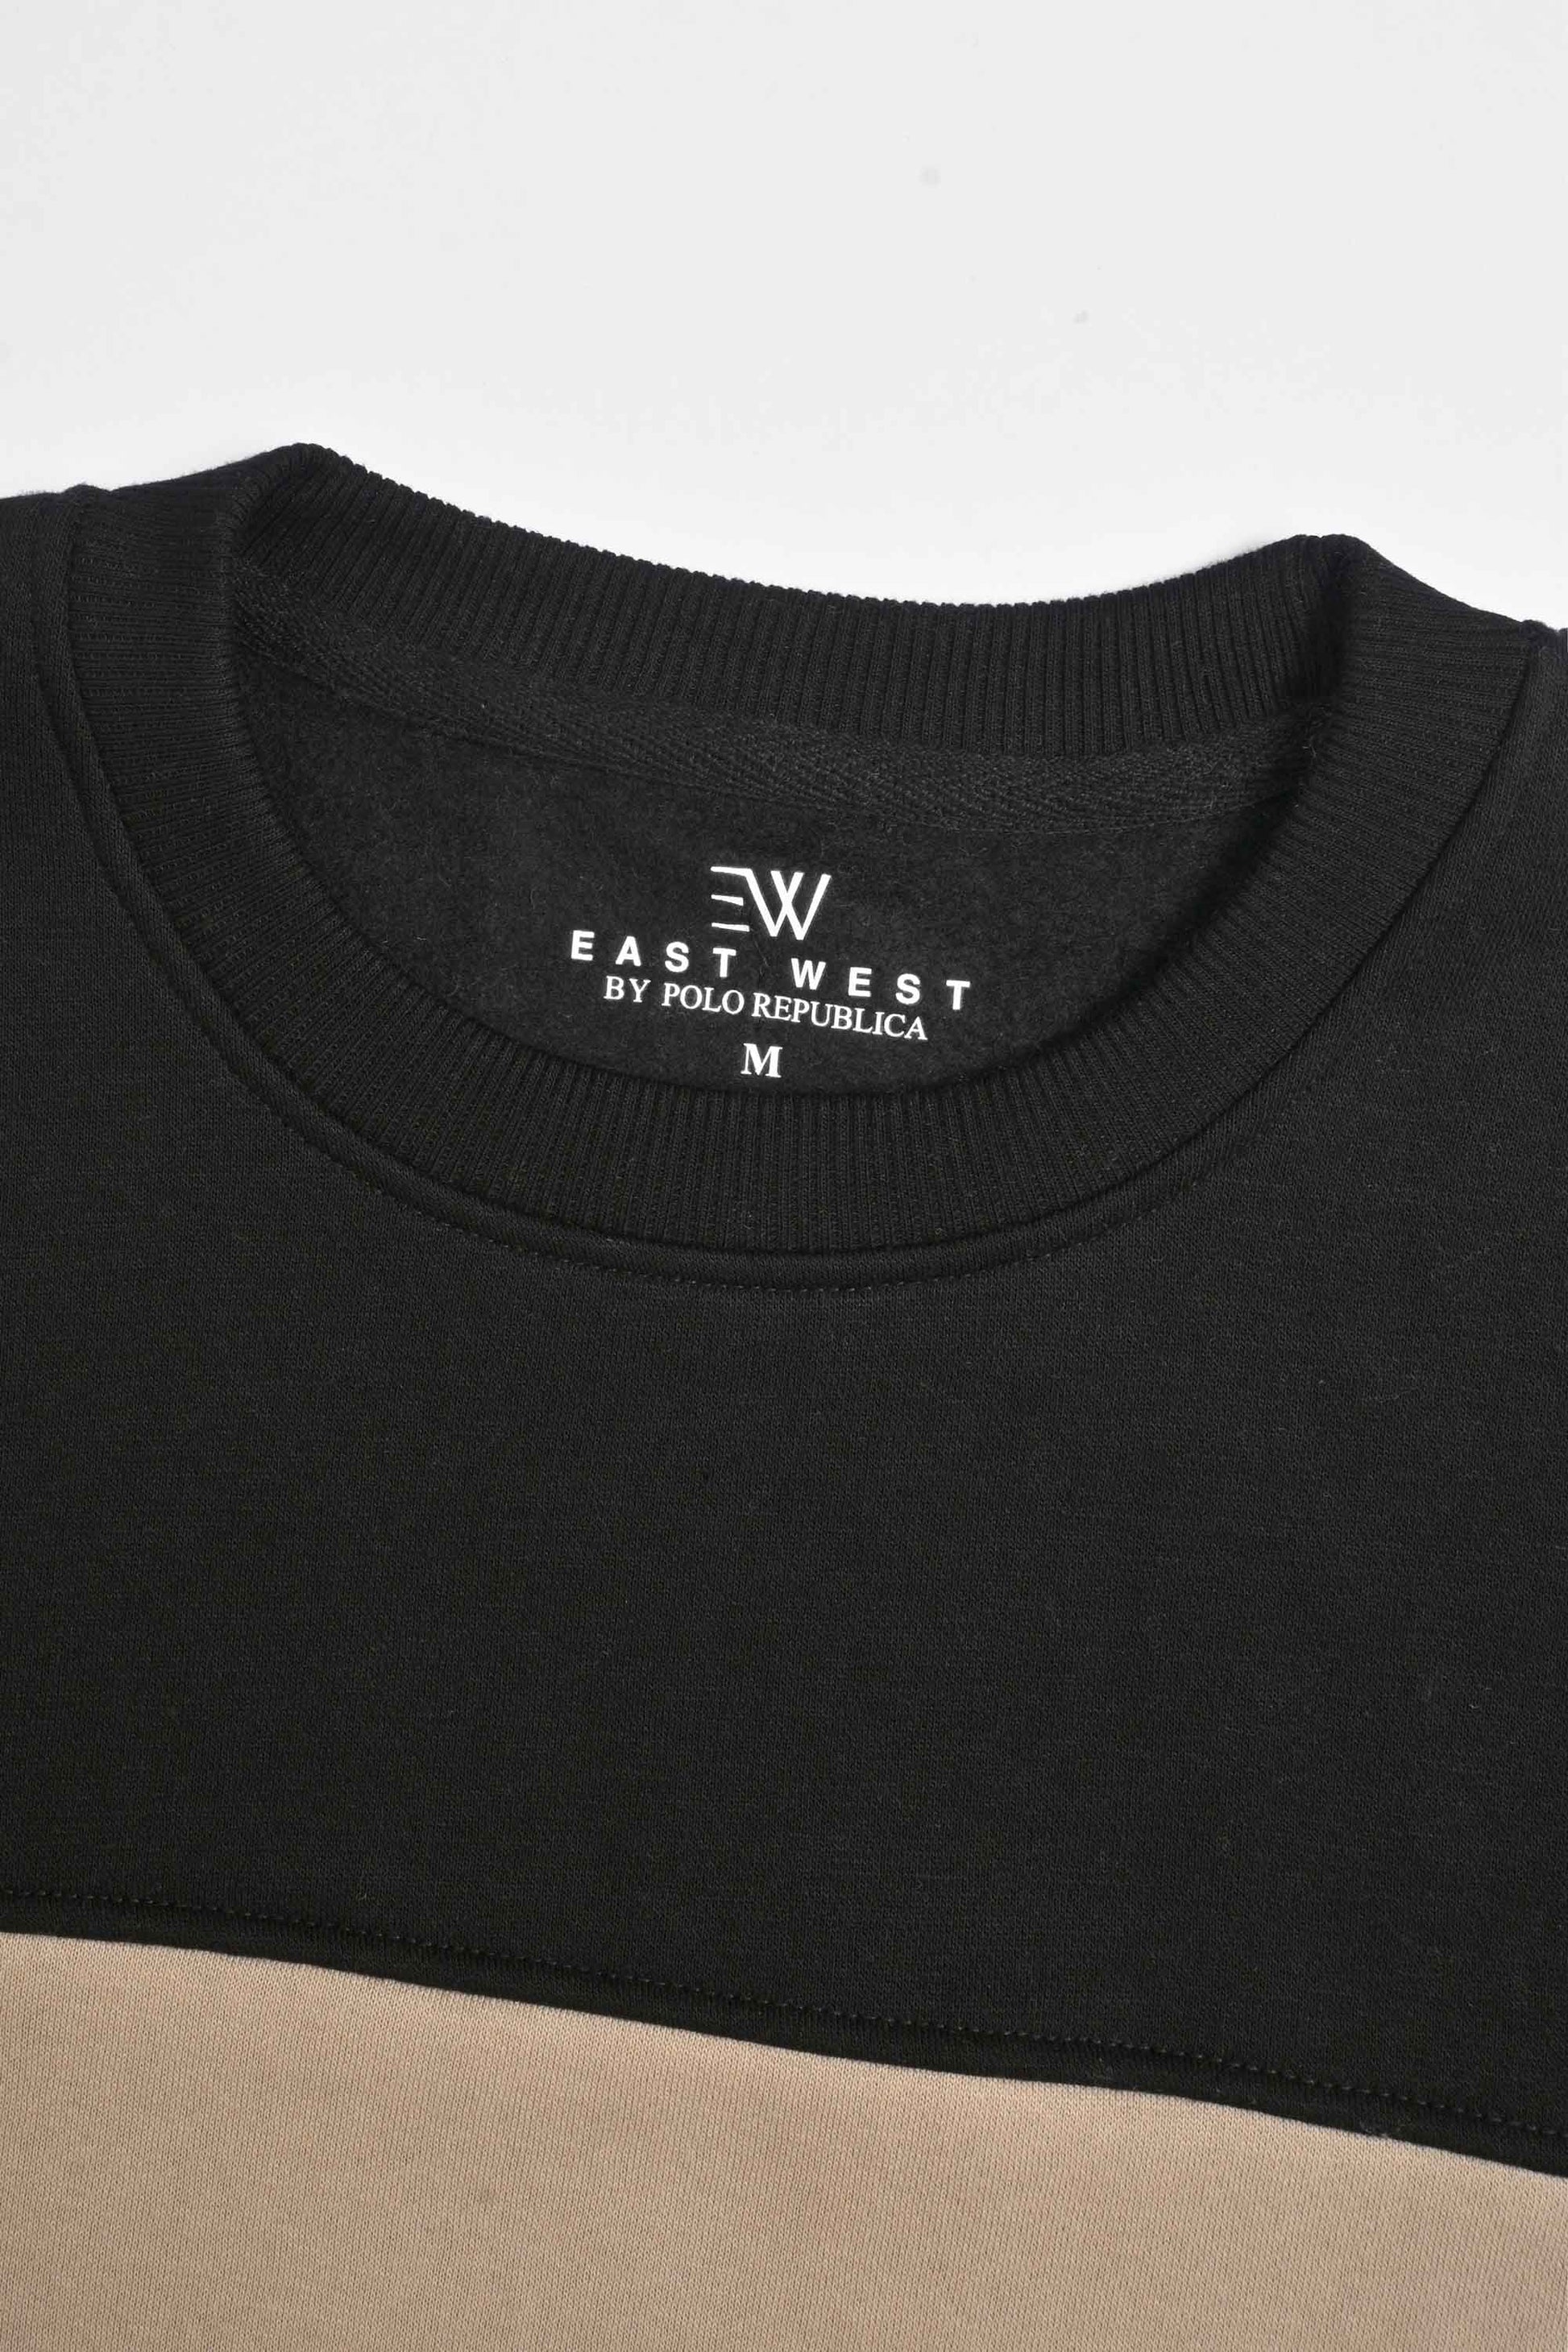 East West Women's Contrast Panel Fleece Sweat Shirt Women's Sweat Shirt Polo Republica 